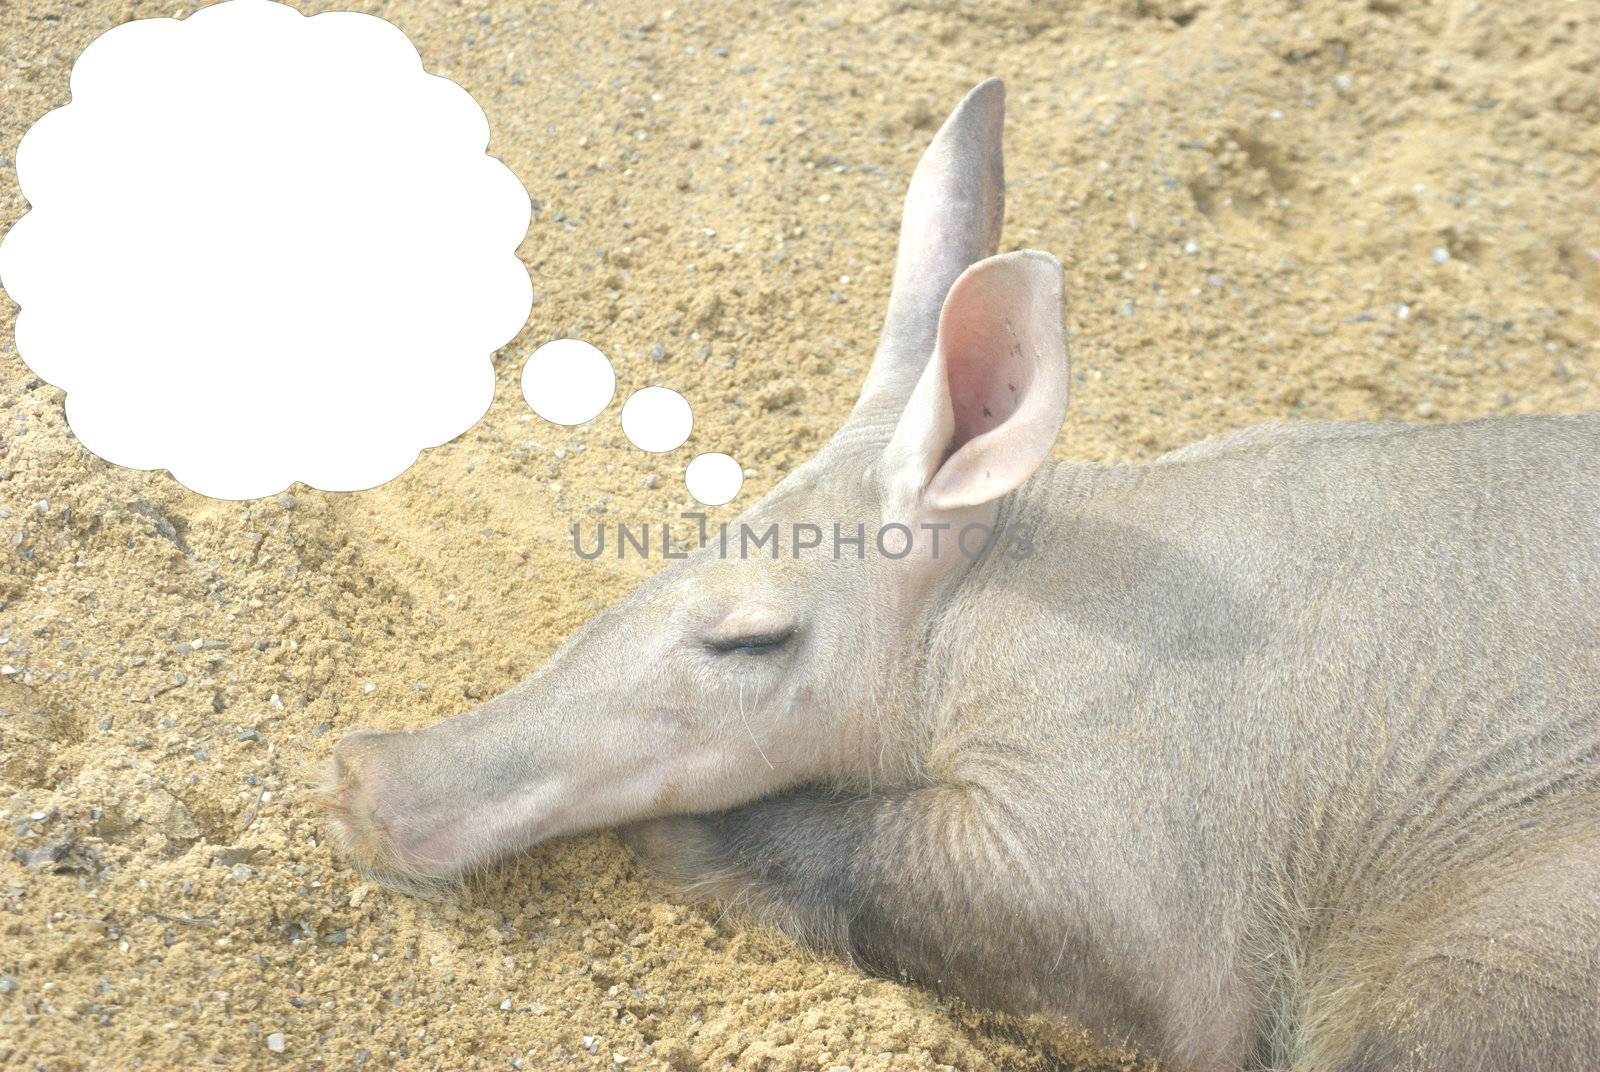 Aardvark asleep dreaming with space for caption